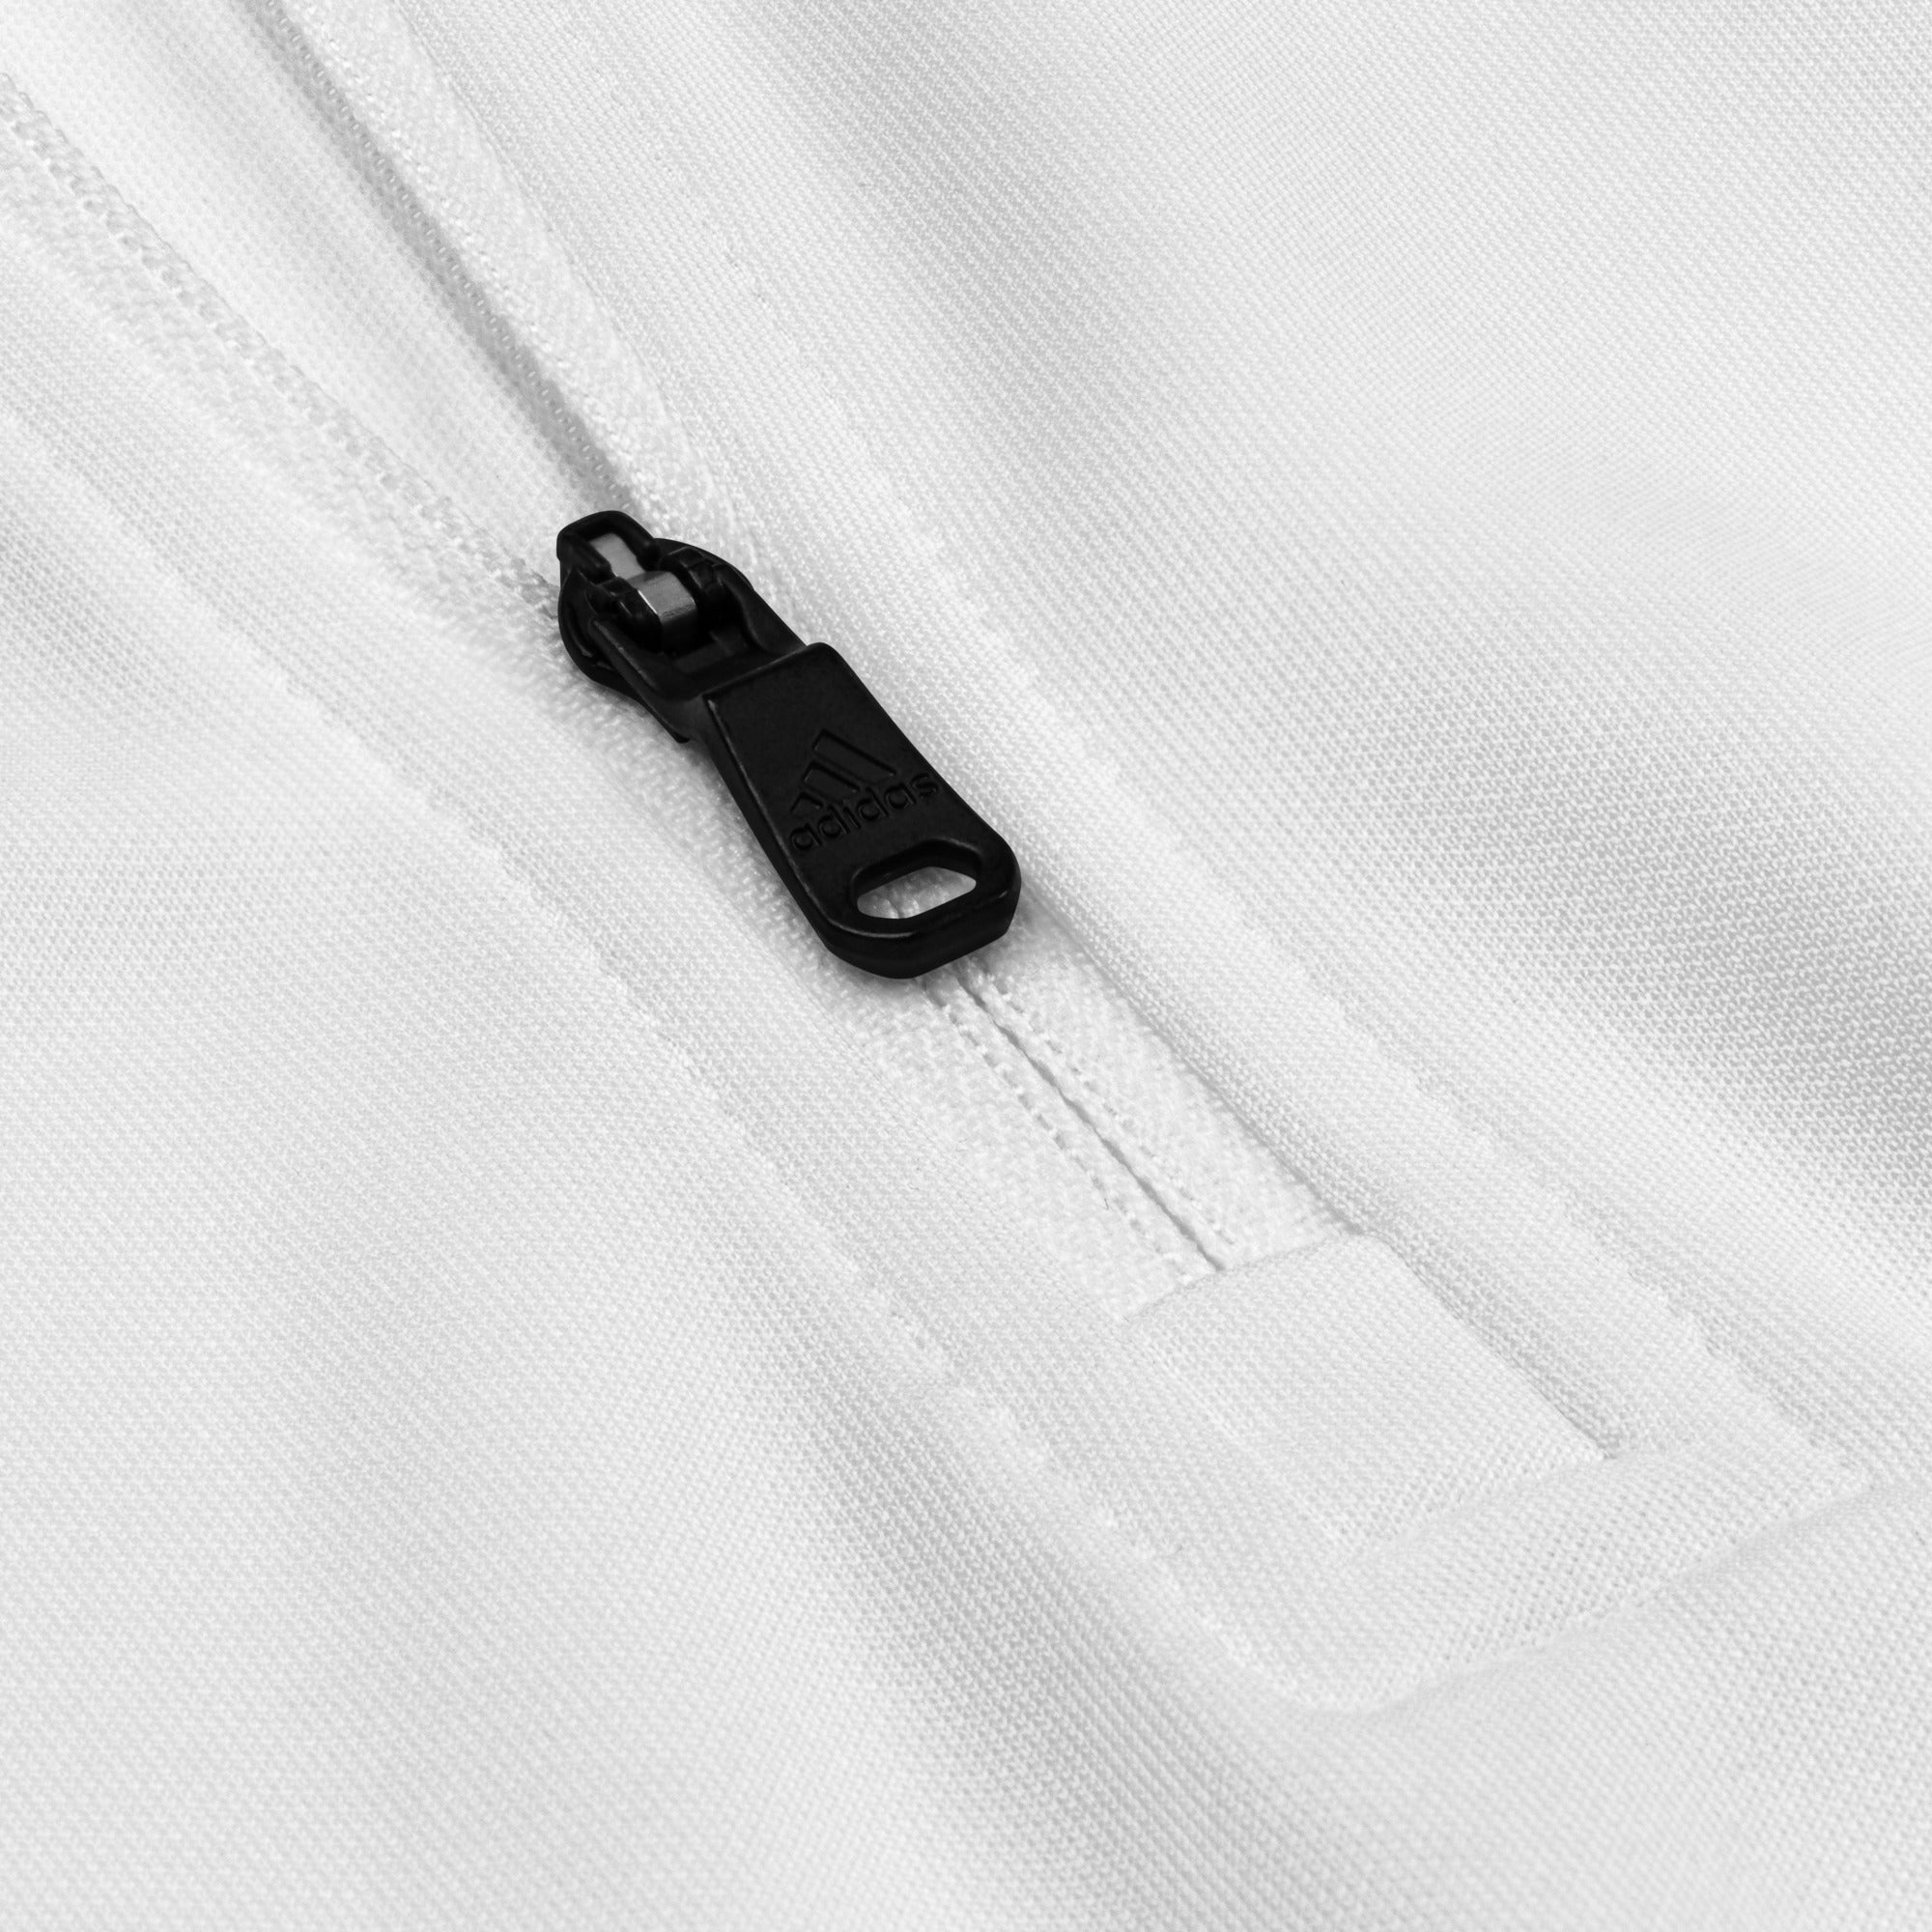 CycleScene/Adidas Quarter zip pullover